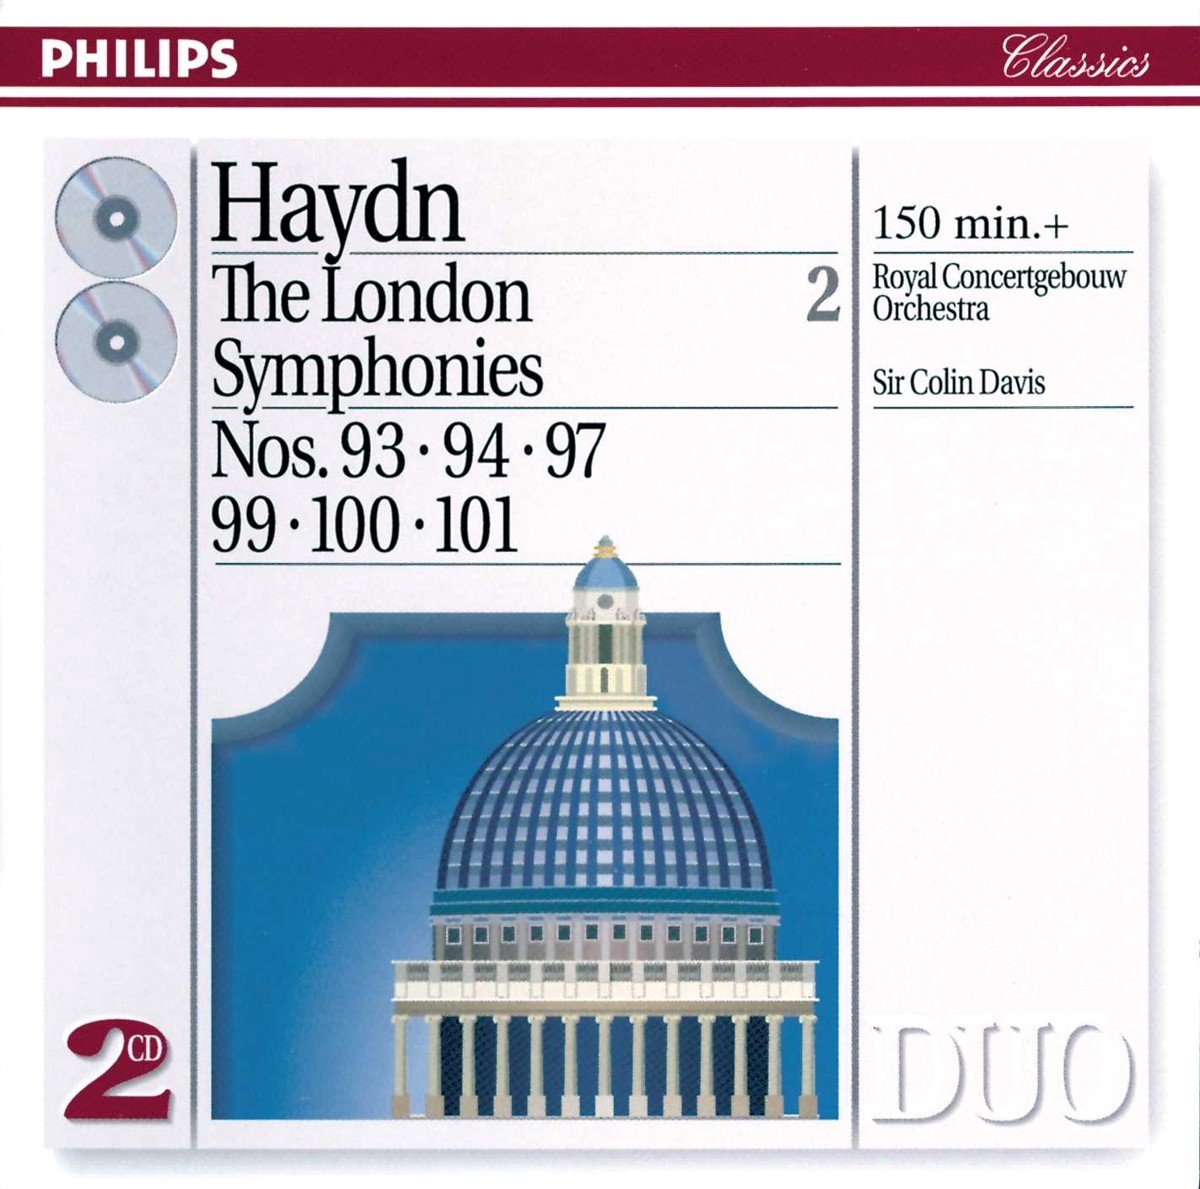 Royal Concertgebouw Orchestra, Sir Colin Davis - Haydn: The London Symphonies - Nos. 93, 94, 97 & 9 (2 CD) - Royal Concertgebouw Orchestra, Sir Colin Davis